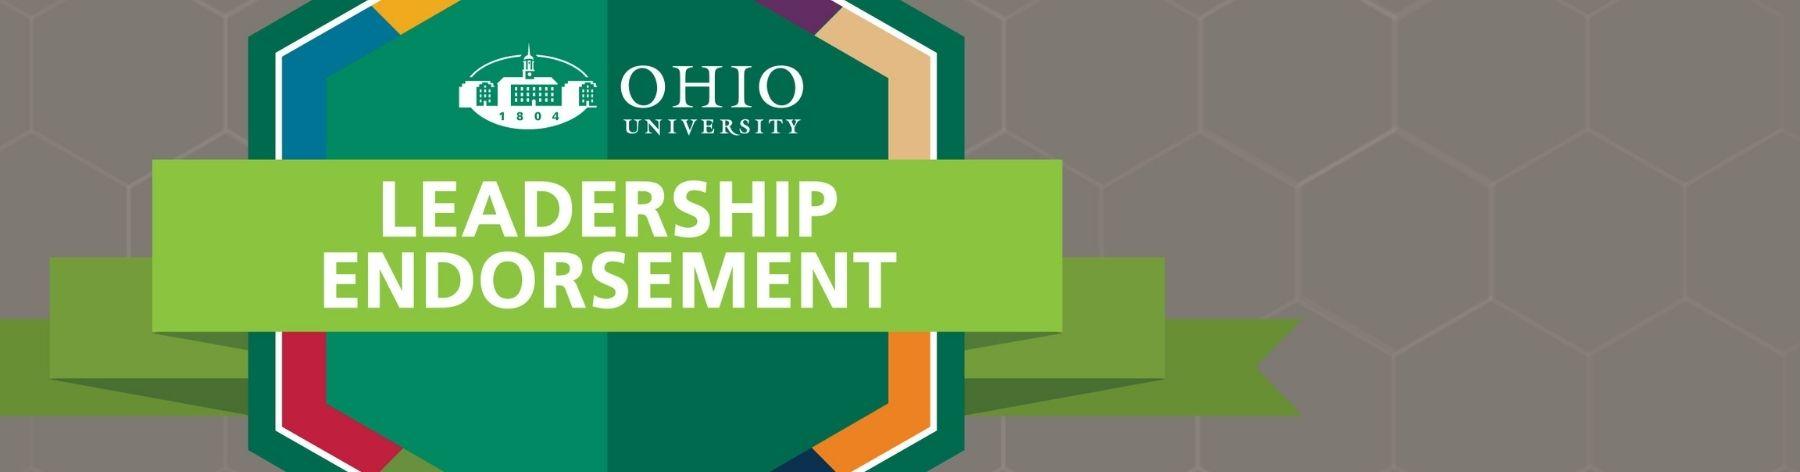 Ohio University Leadership Edorsement logo